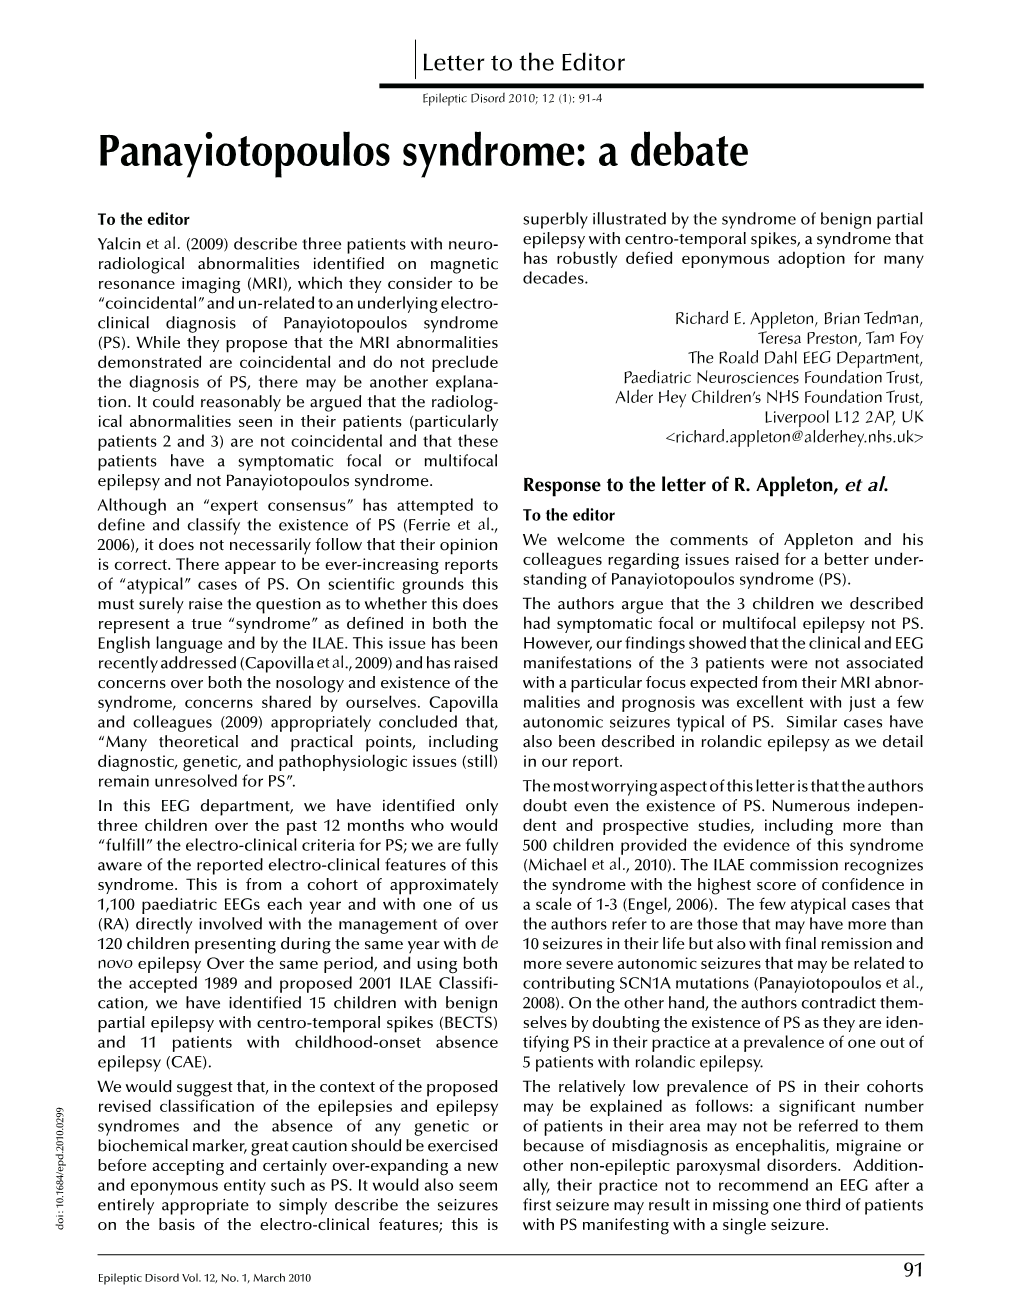 Panayiotopoulos Syndrome: a Debate